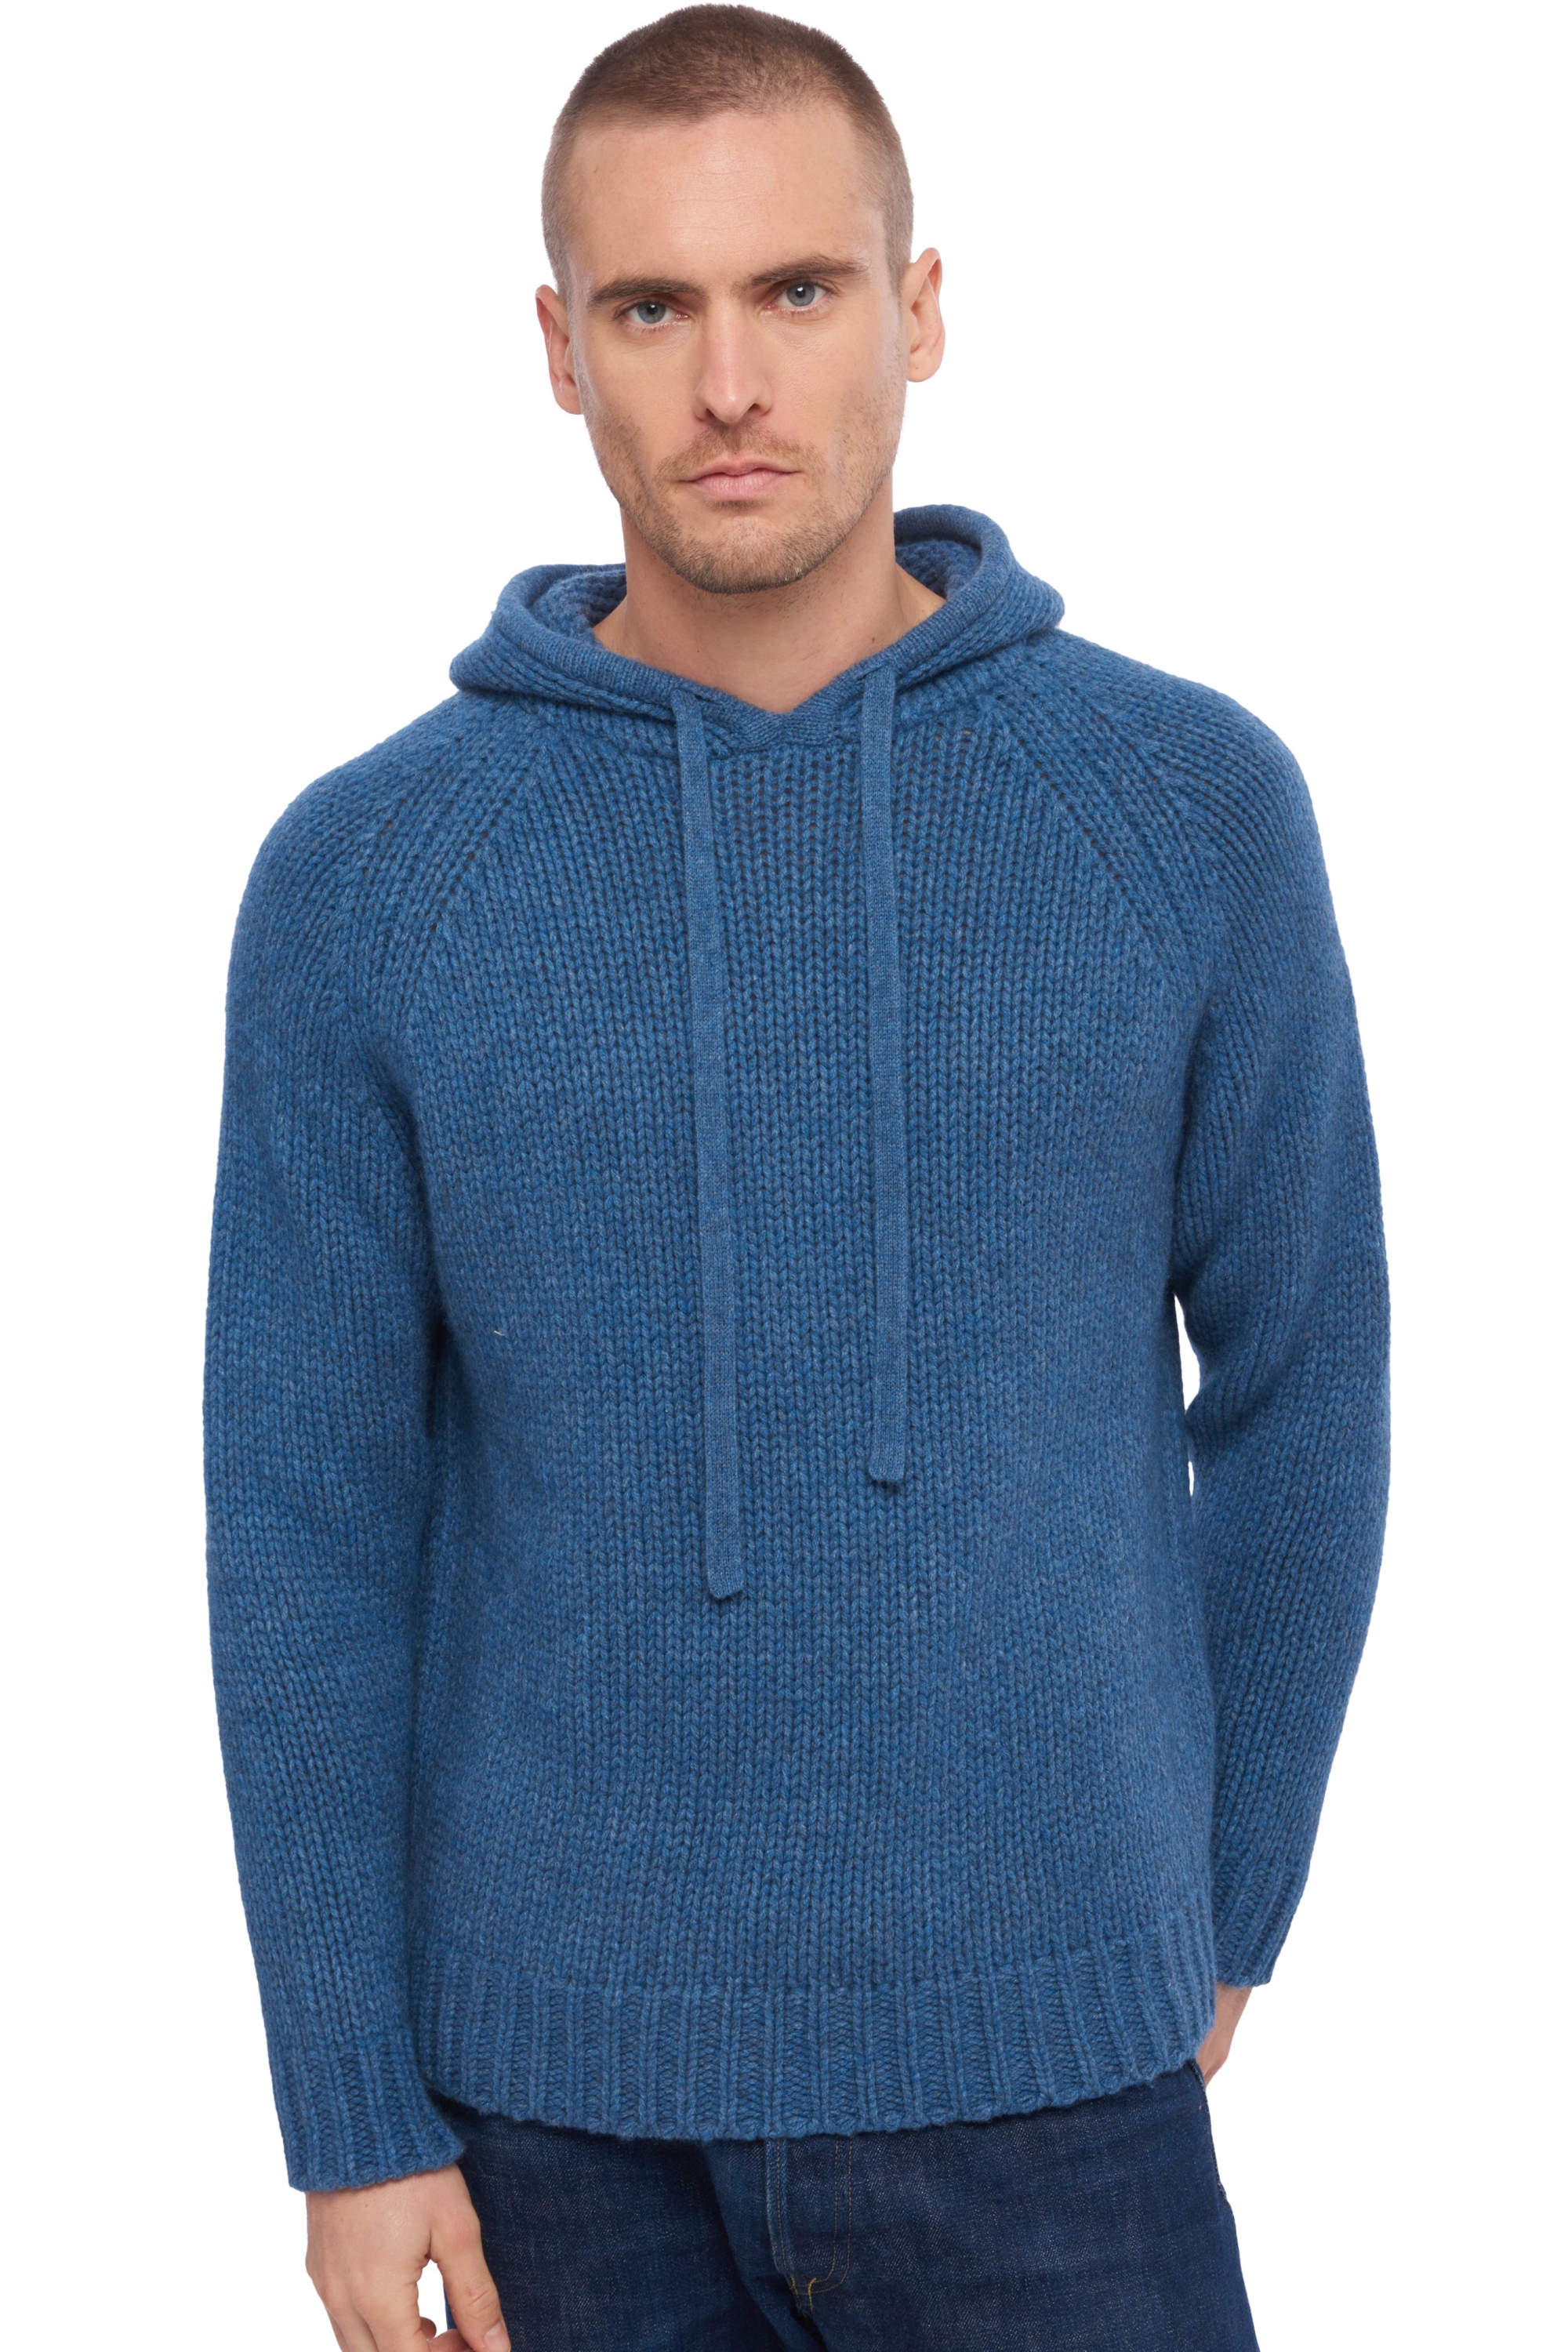 Yak men chunky sweater winston stellar blue m